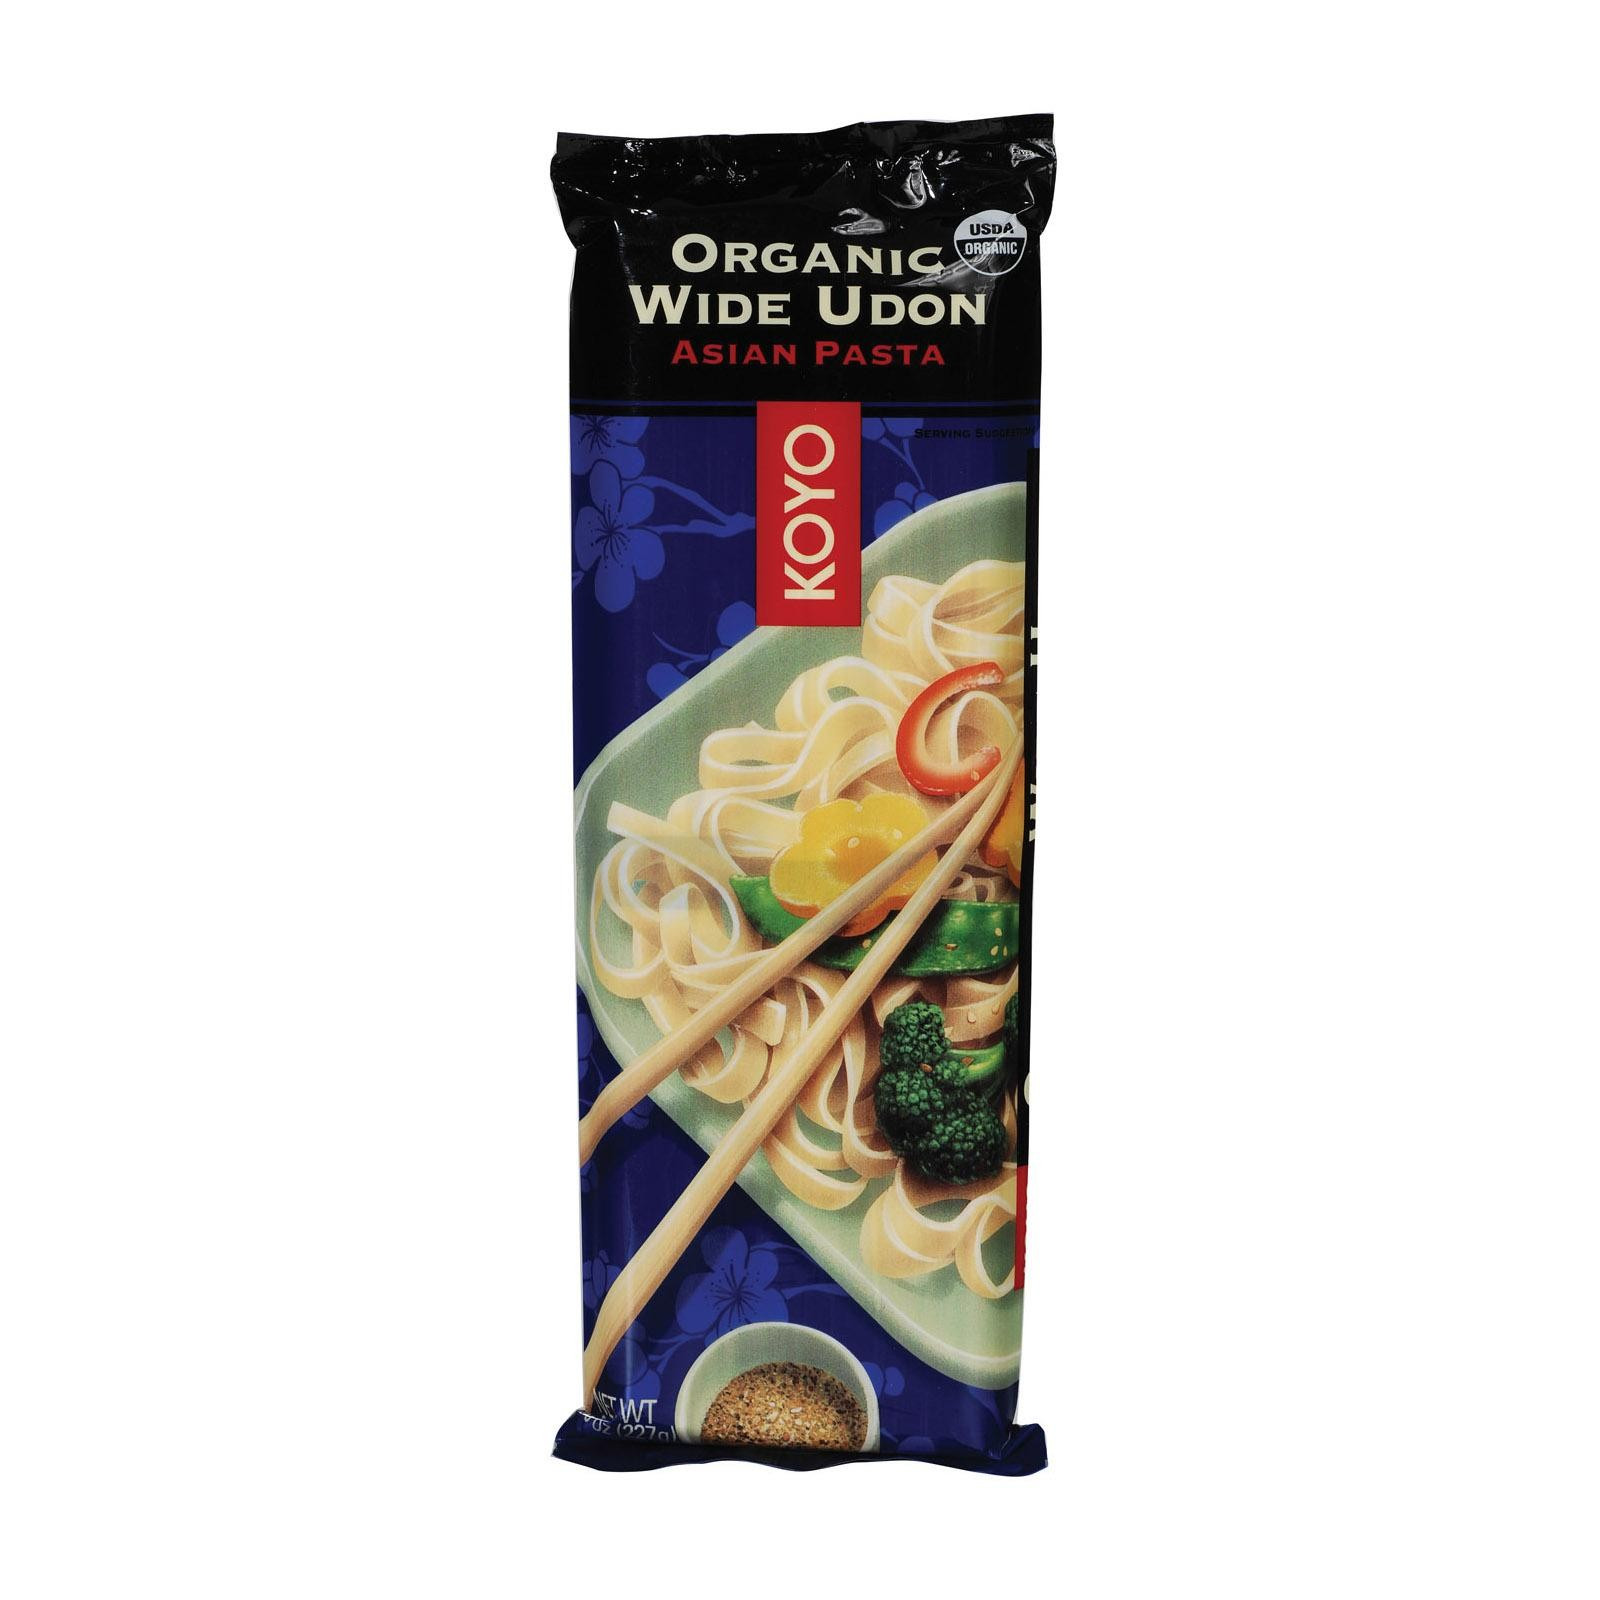 Udon Noodles Walmart
 Koyo Organic Udon Noodle Wide 8 Oz Walmart